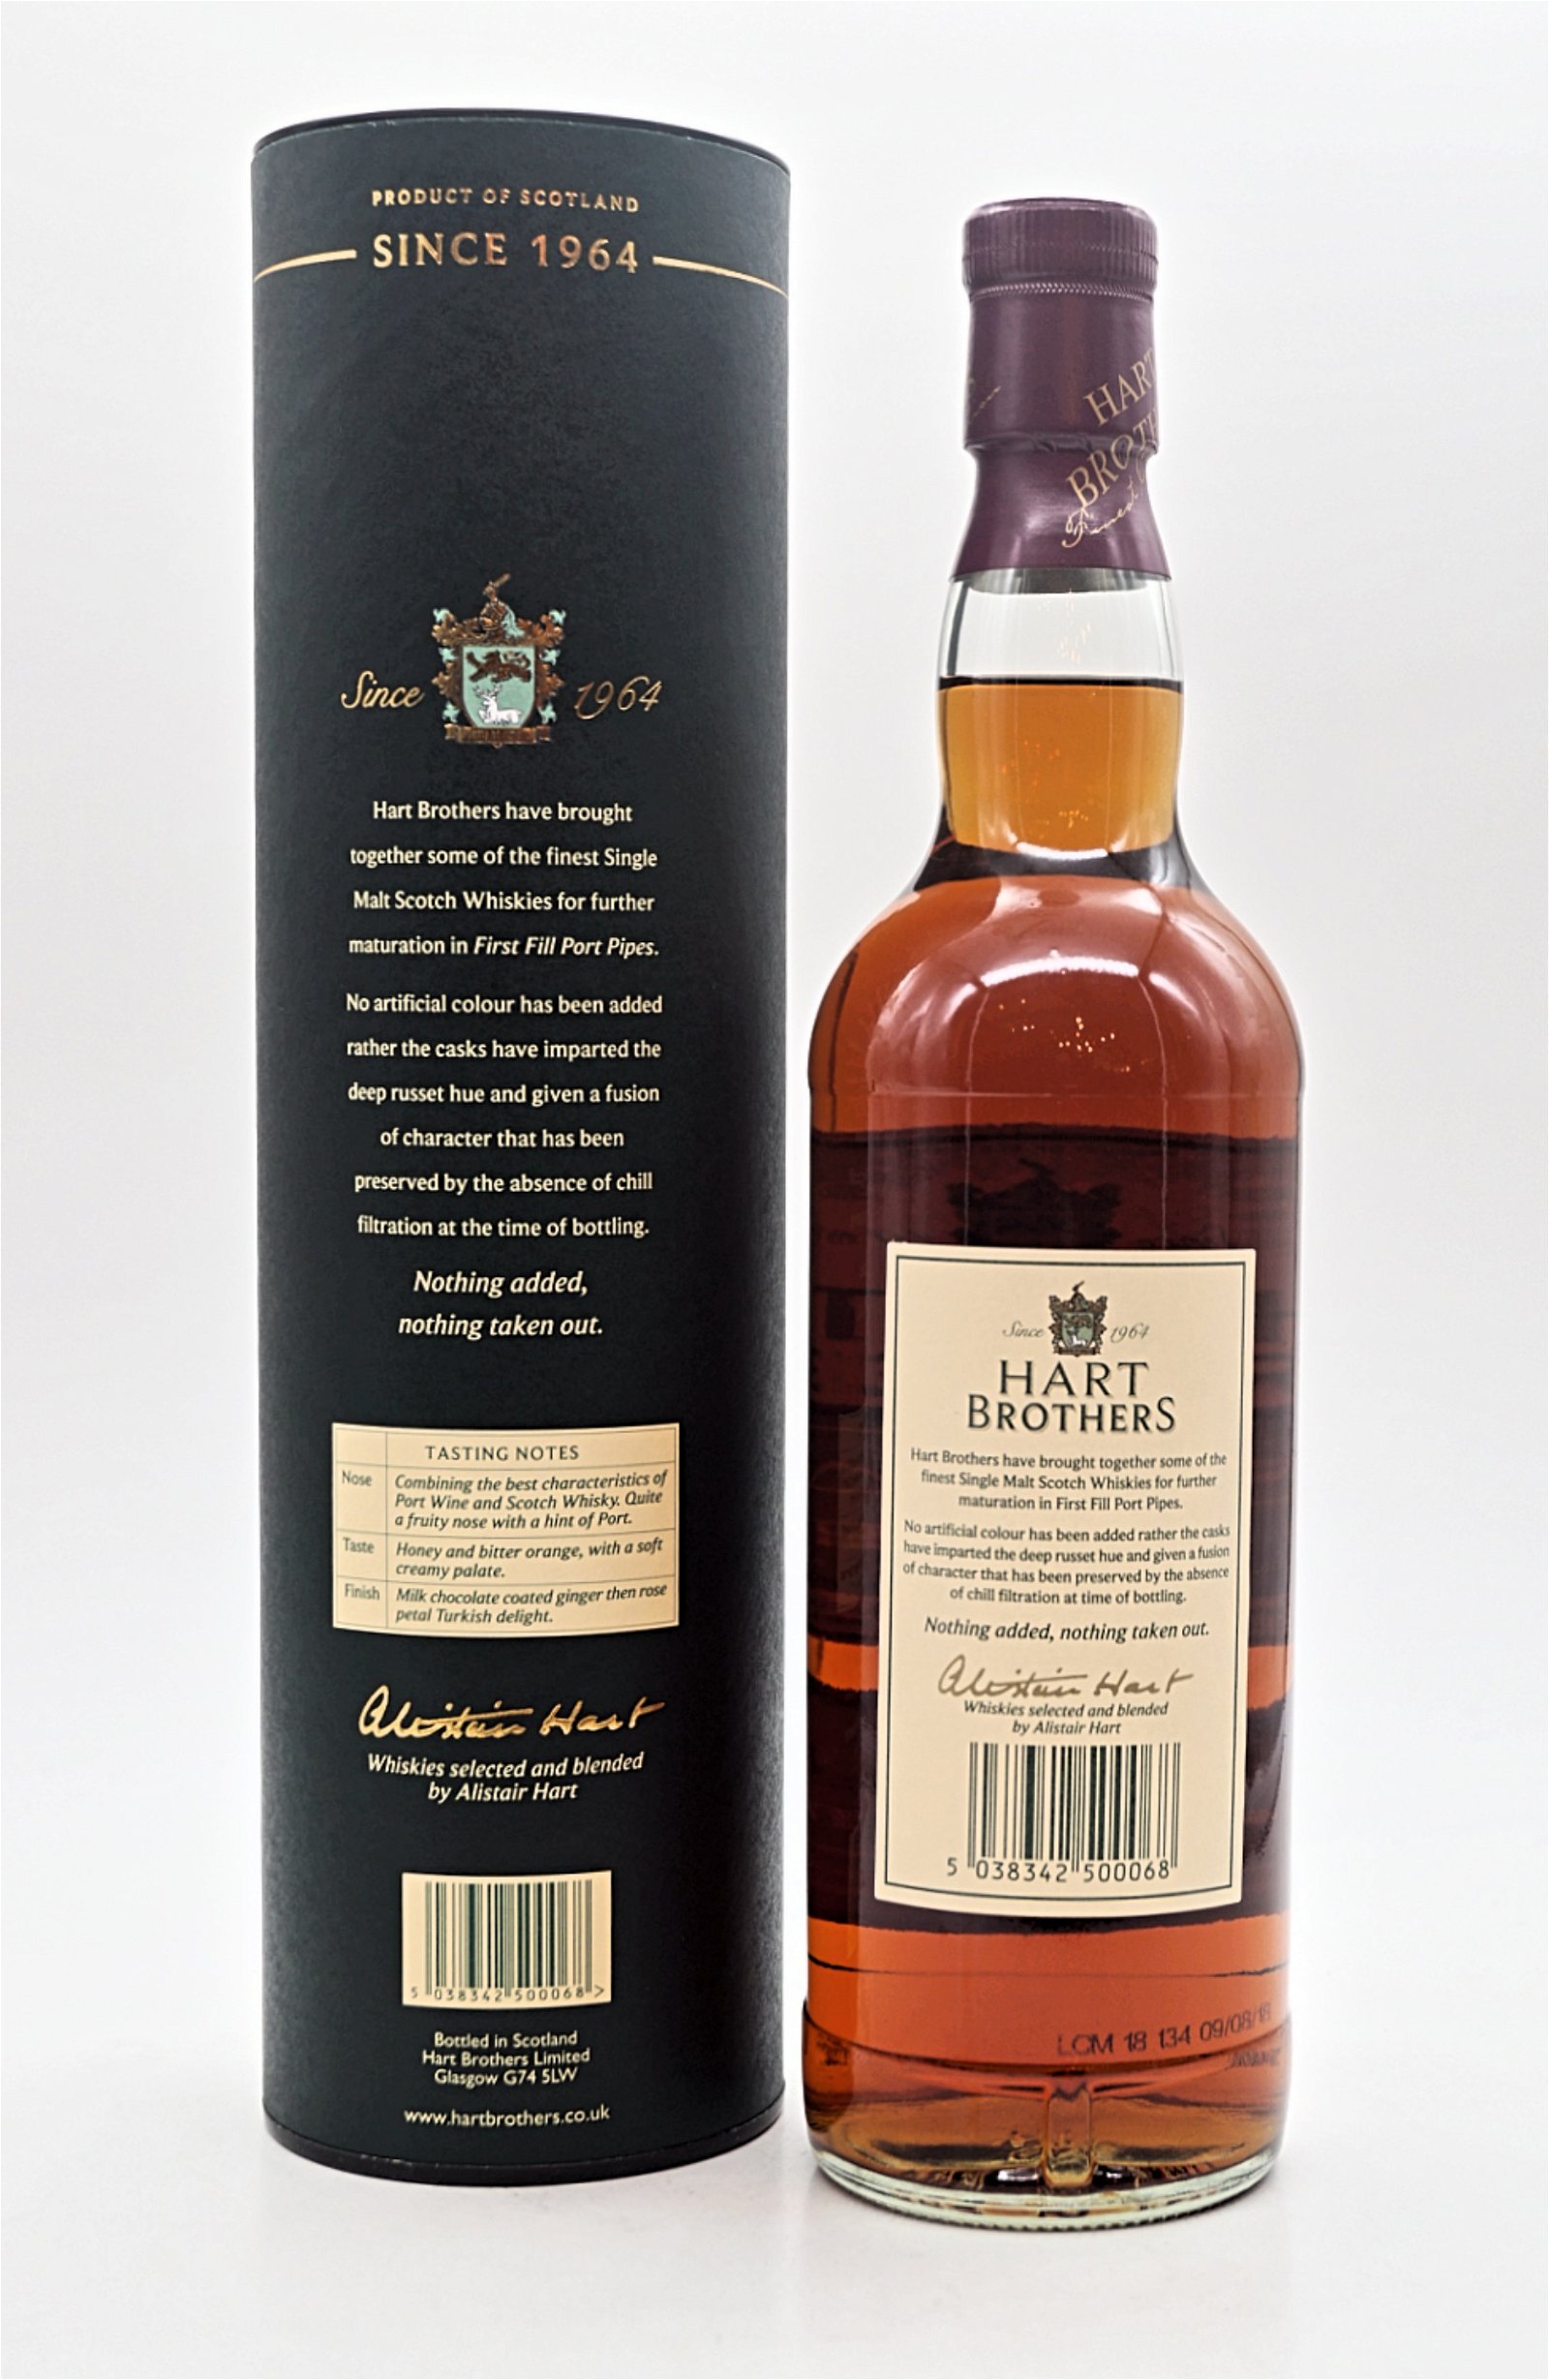 Hart Brothers 17 Jahre Blended Malt Port Finish Scotch Whisky